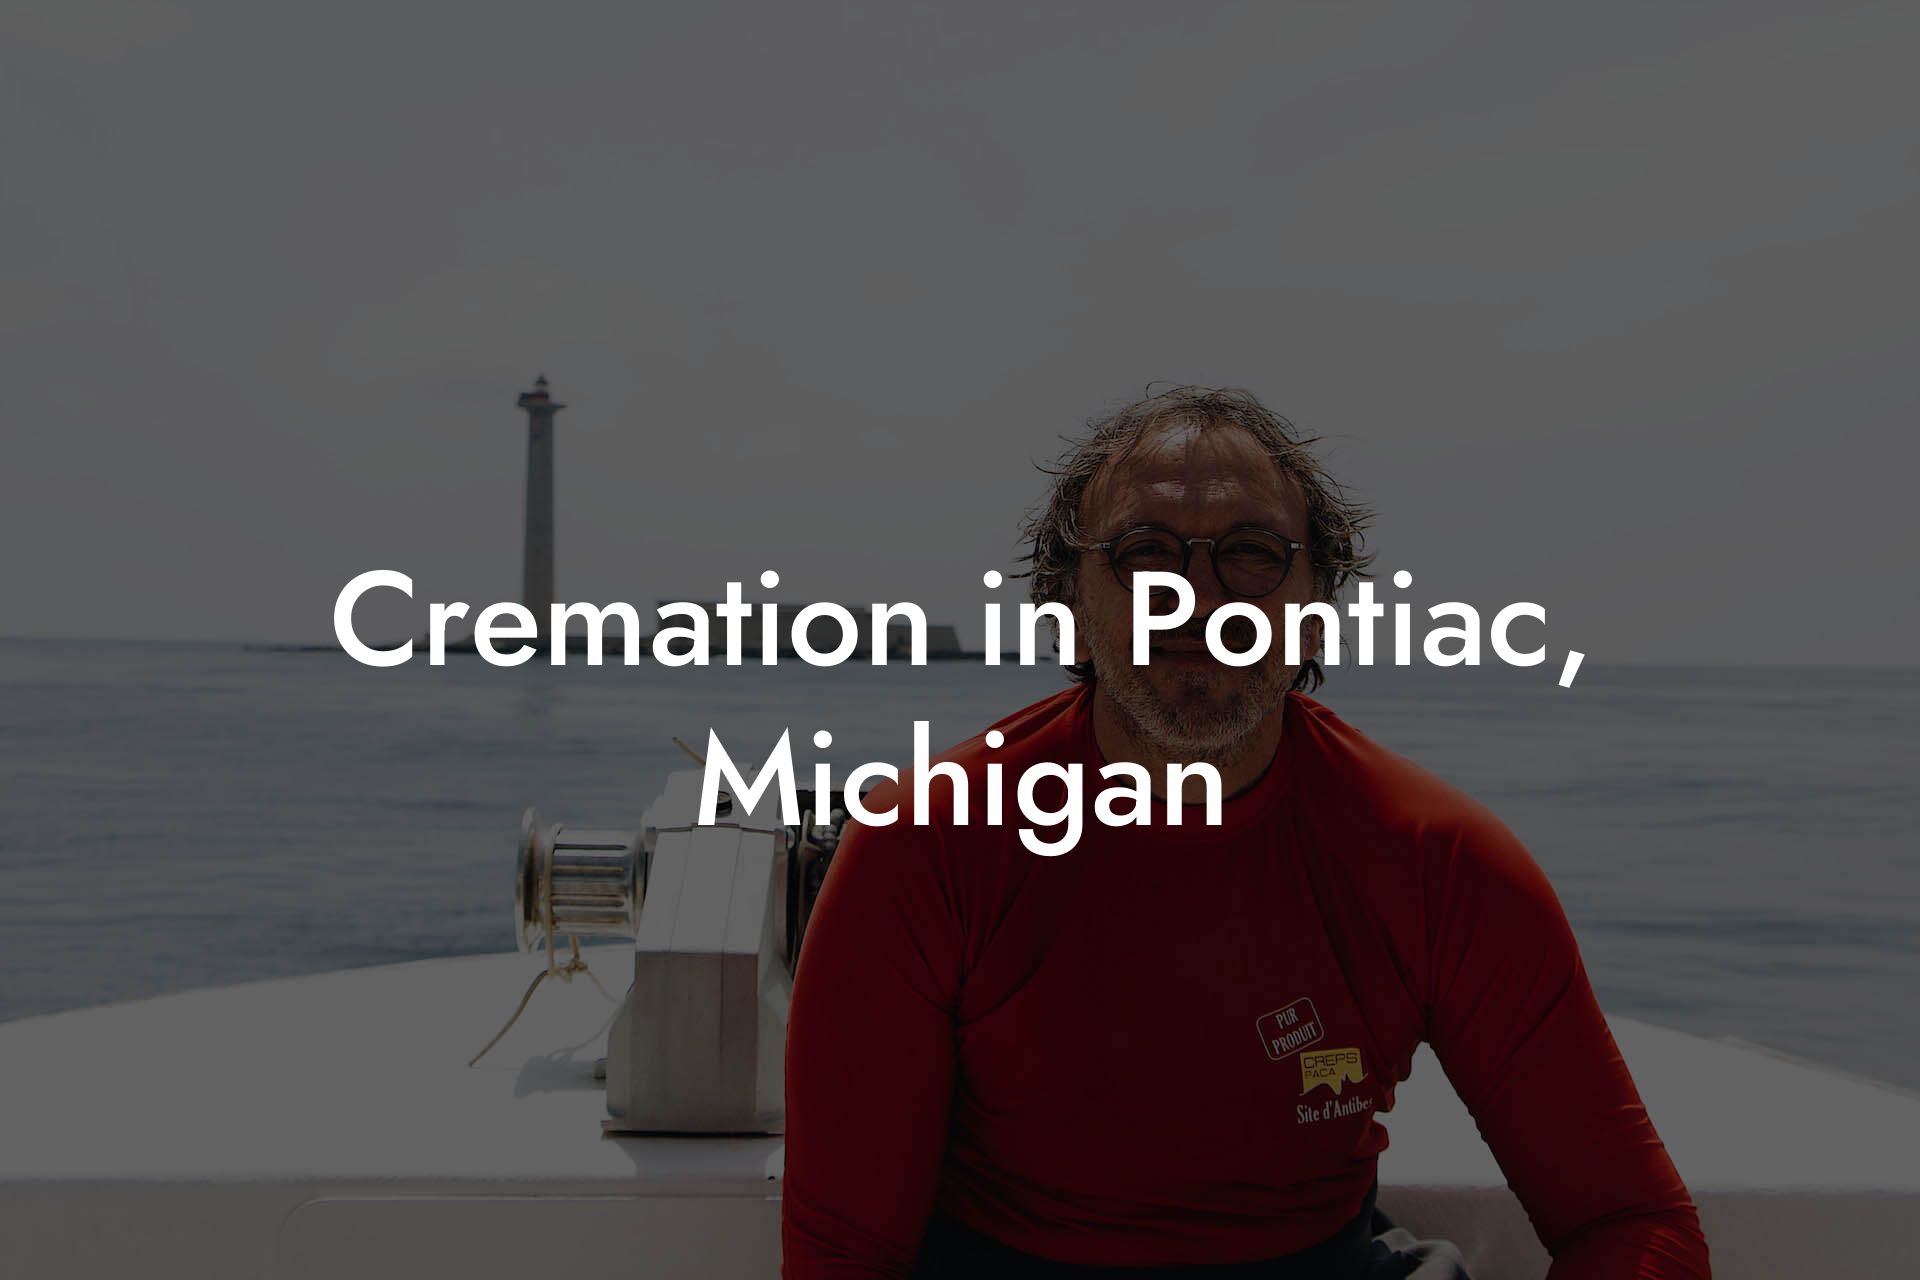 Cremation in Pontiac, Michigan